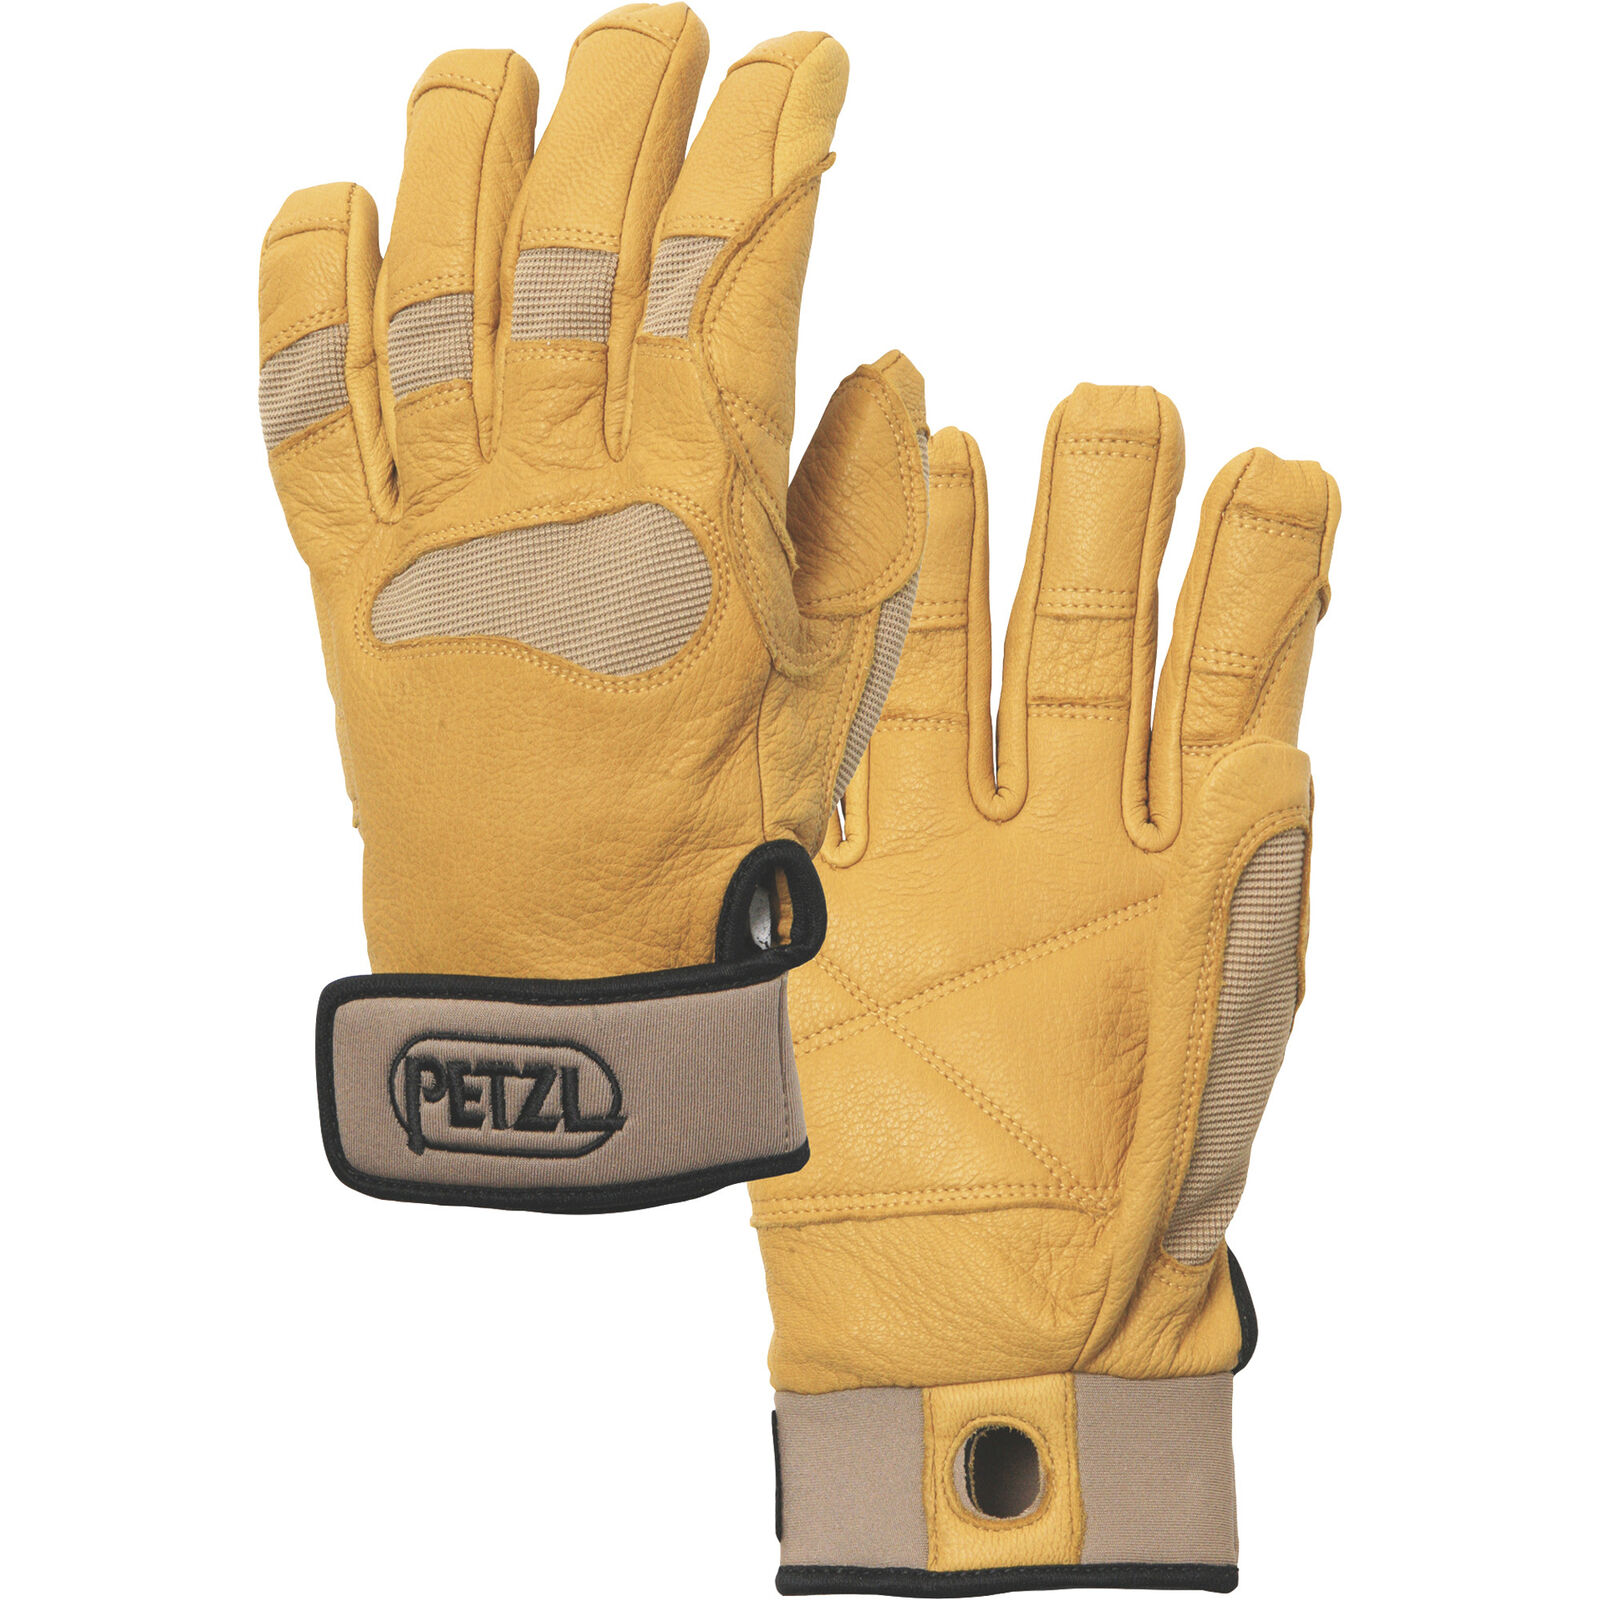 Petzl Cordex Plus Medium-weight Belay/rappel Gloves - Tan, Medium, Model# K53 Mt